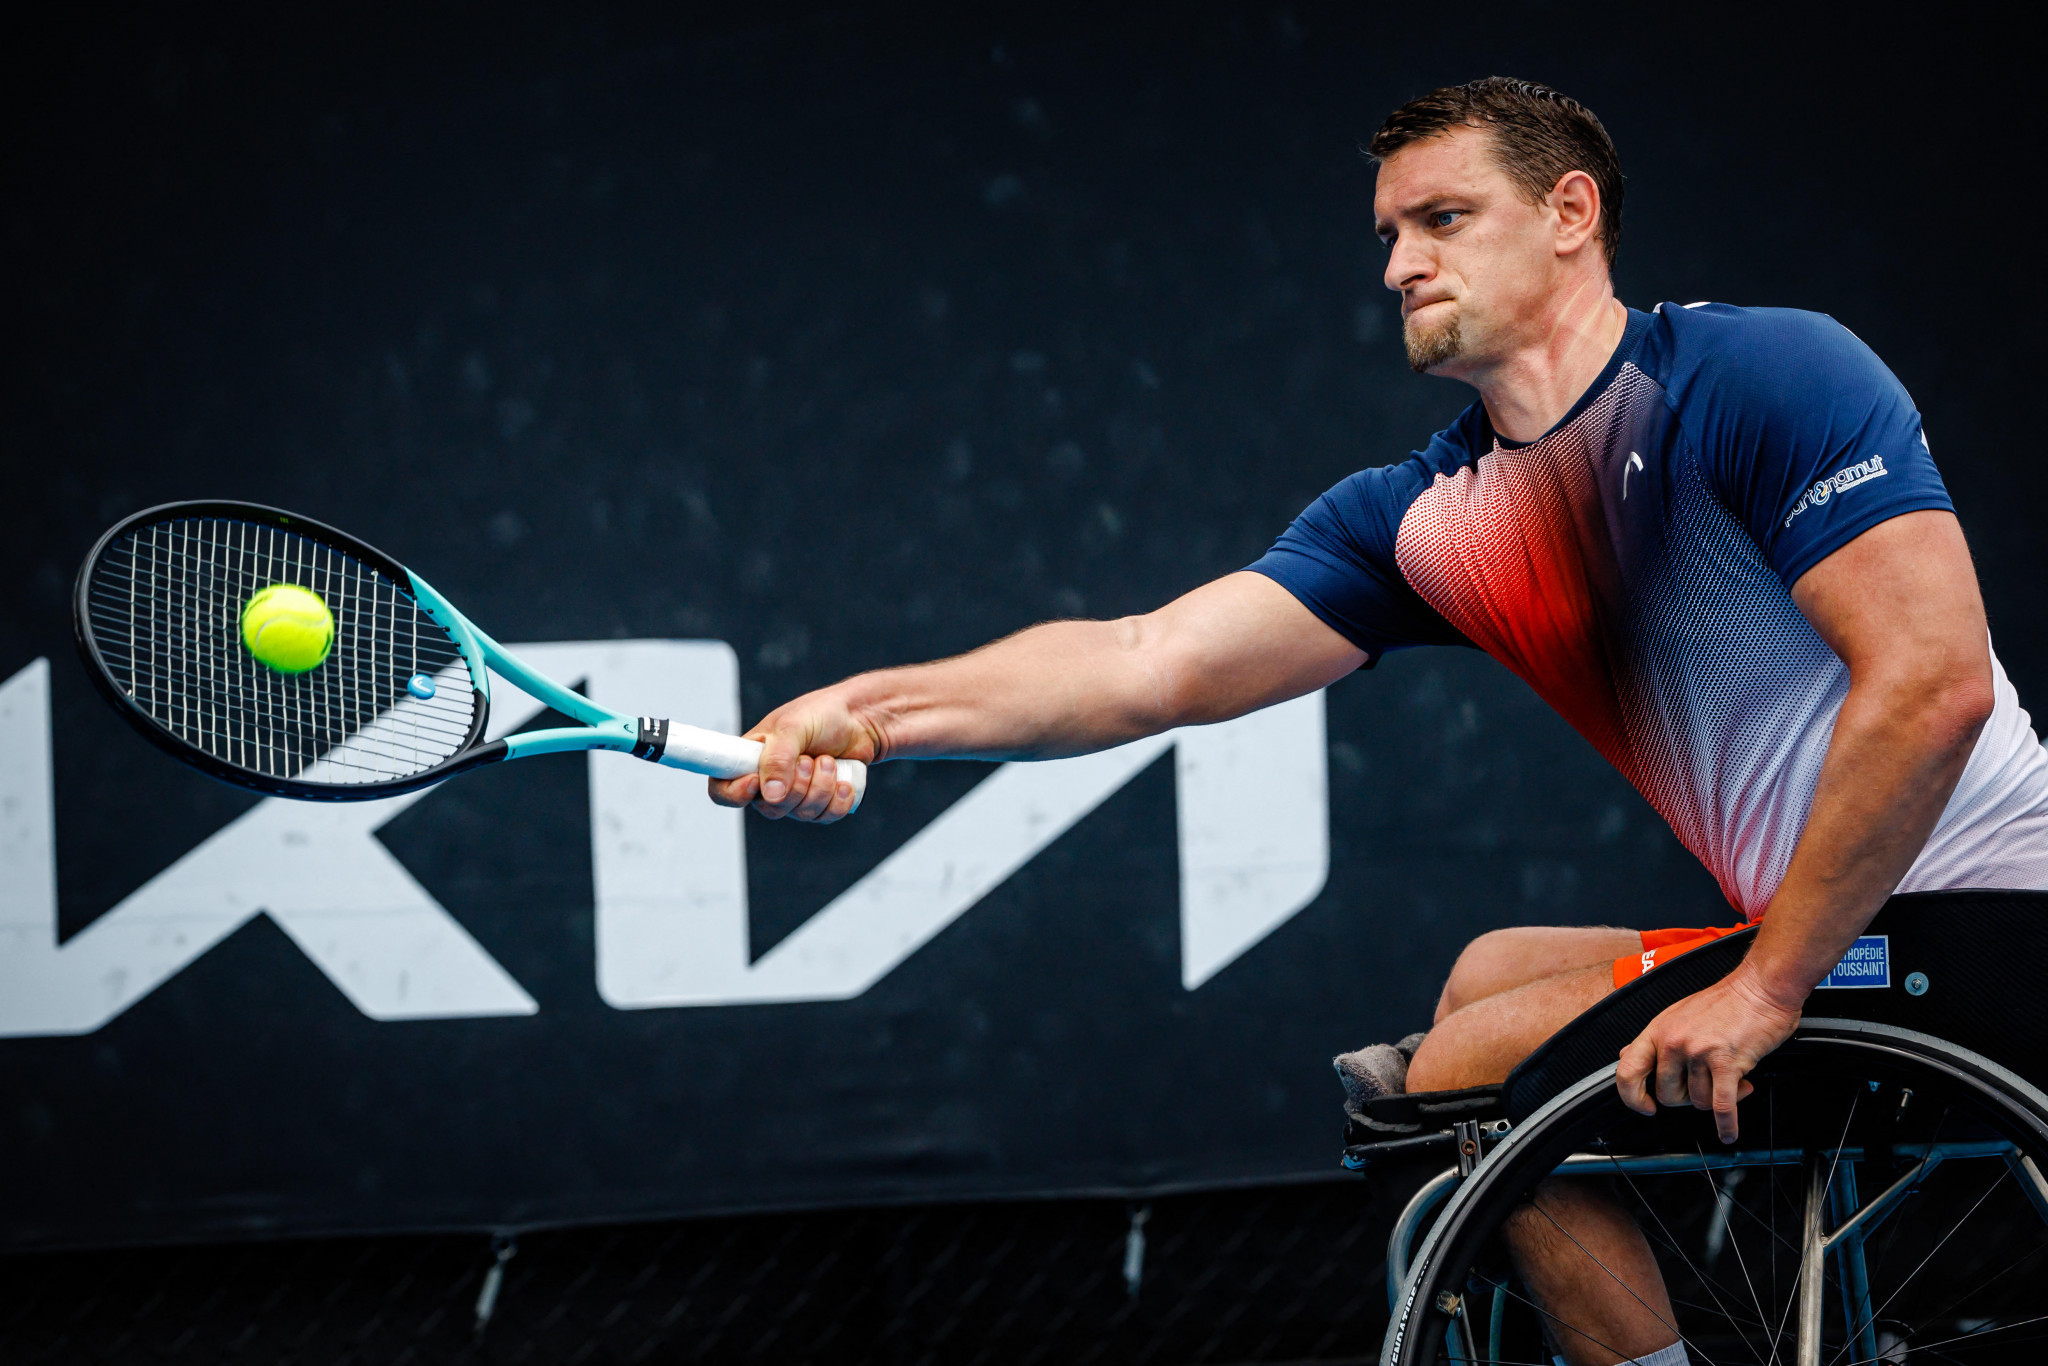 Gérard suffers biggest upset on first day of wheelchair tennis at Australian Open